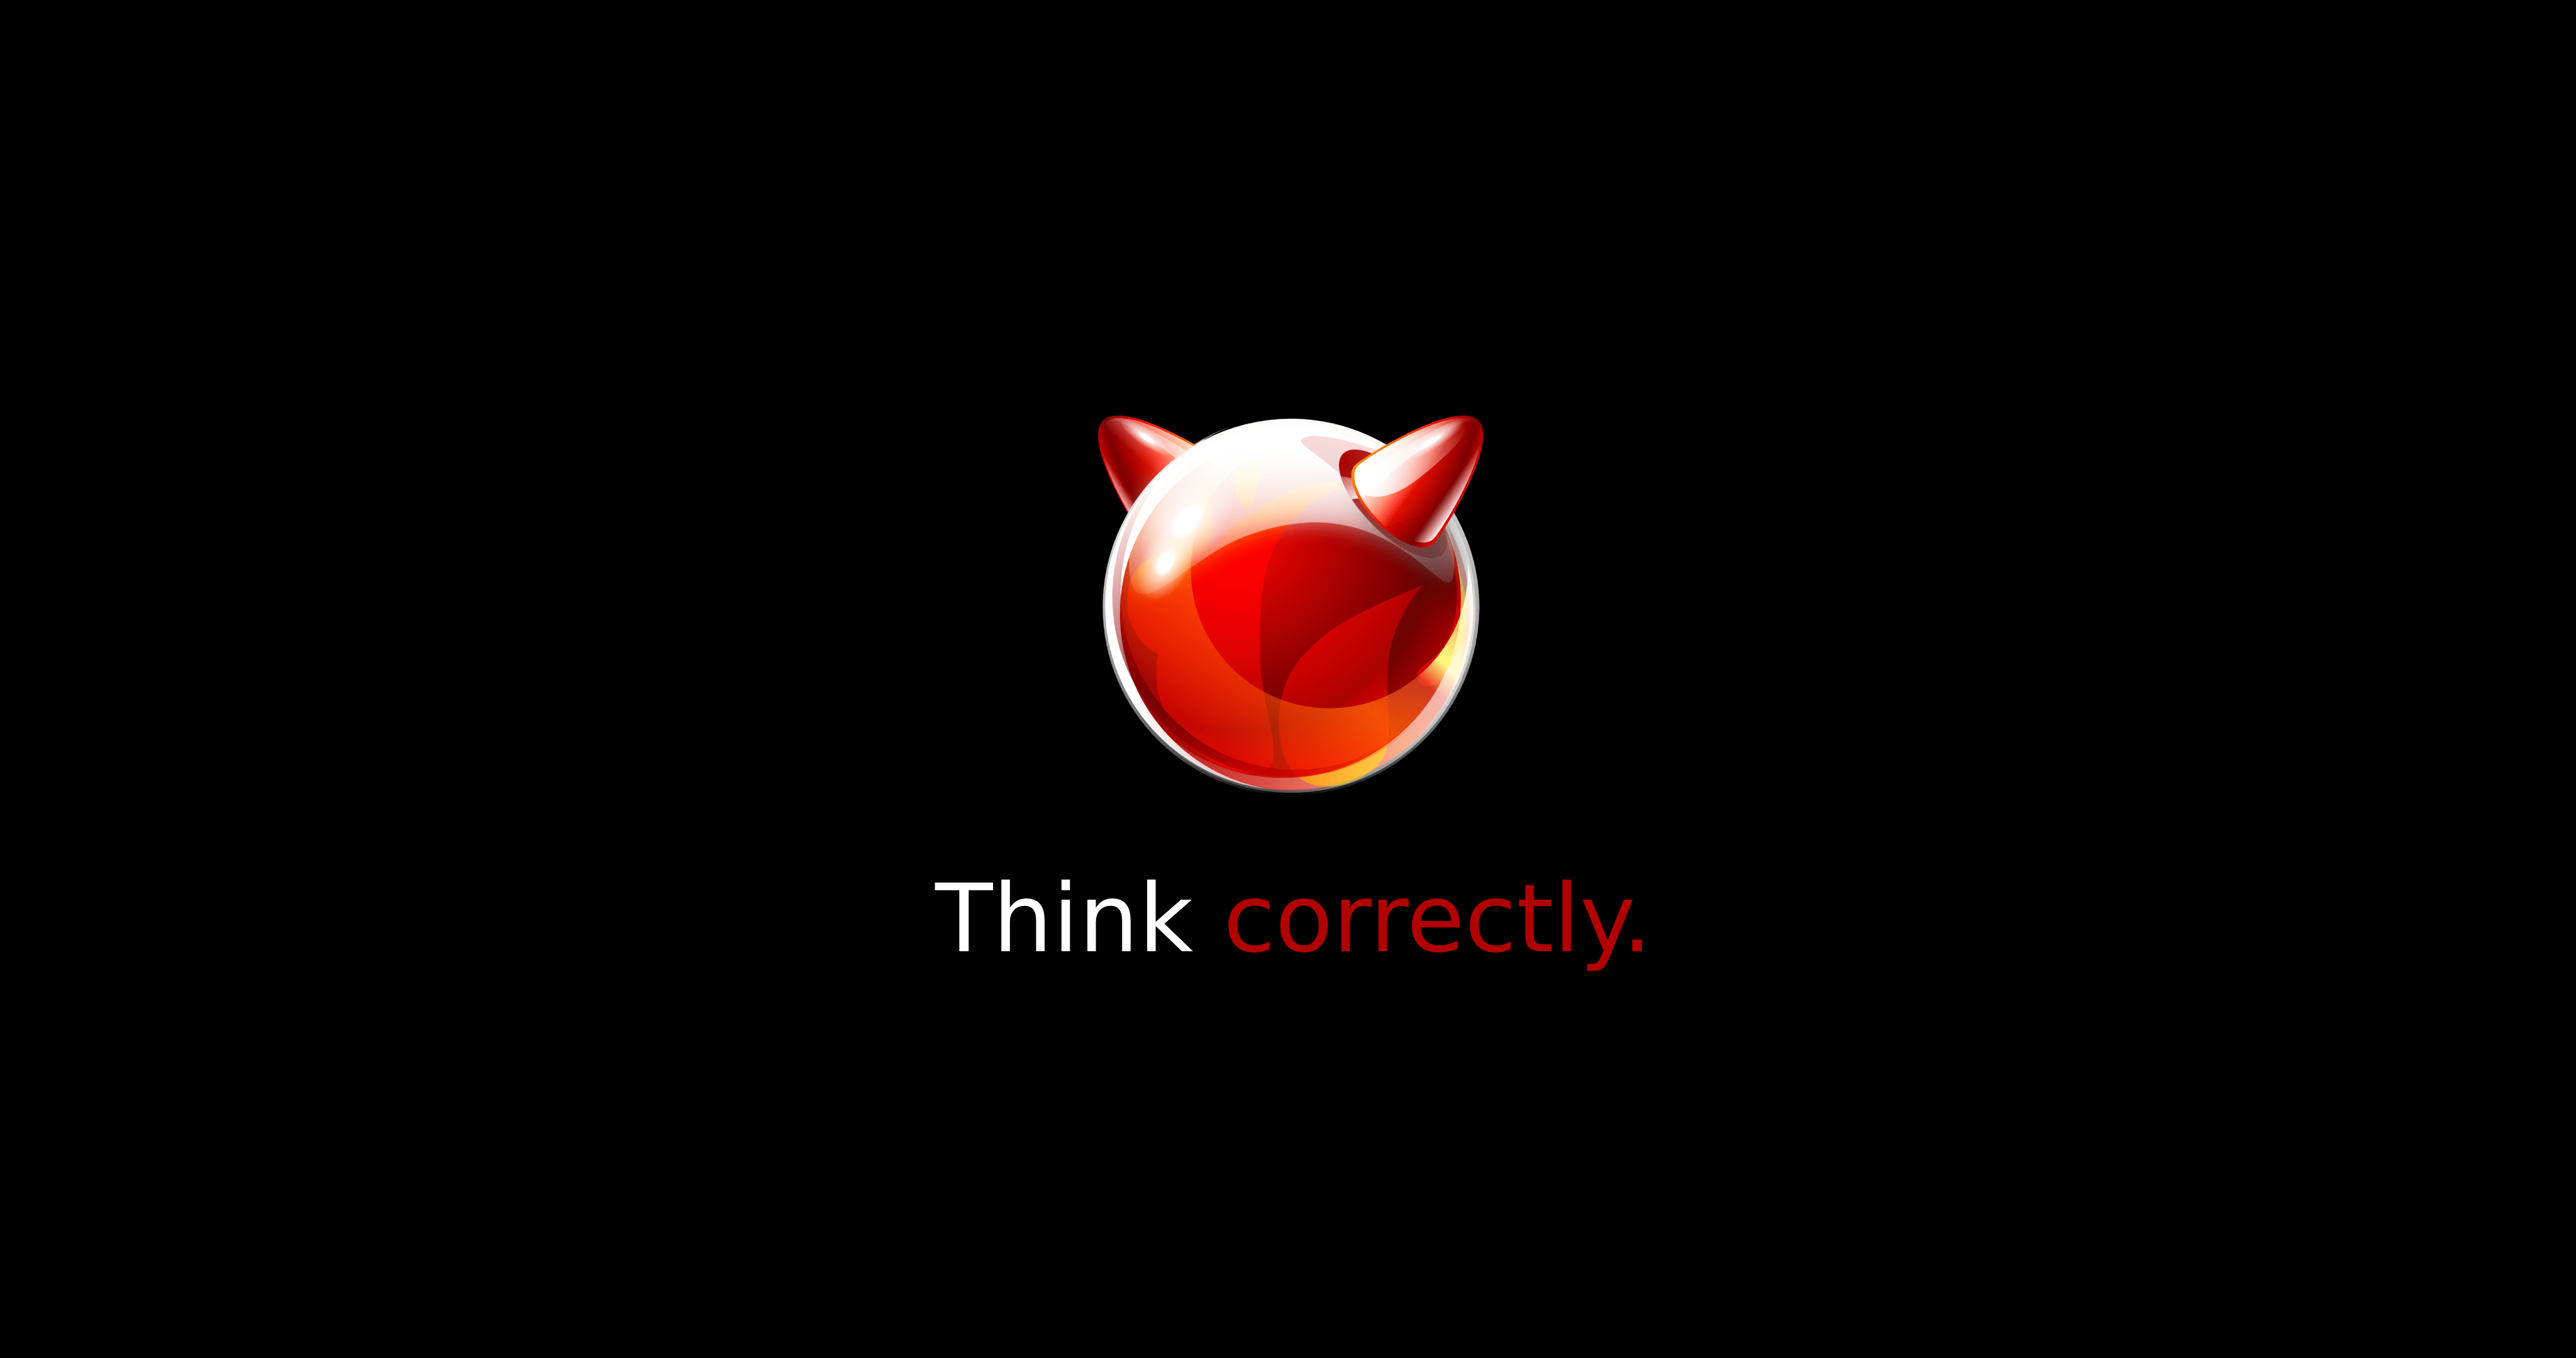 Freebsd Linux ThinkPad Bsd Text Black Background Simple Background Digital Art Minimalism Logo 4096x2160